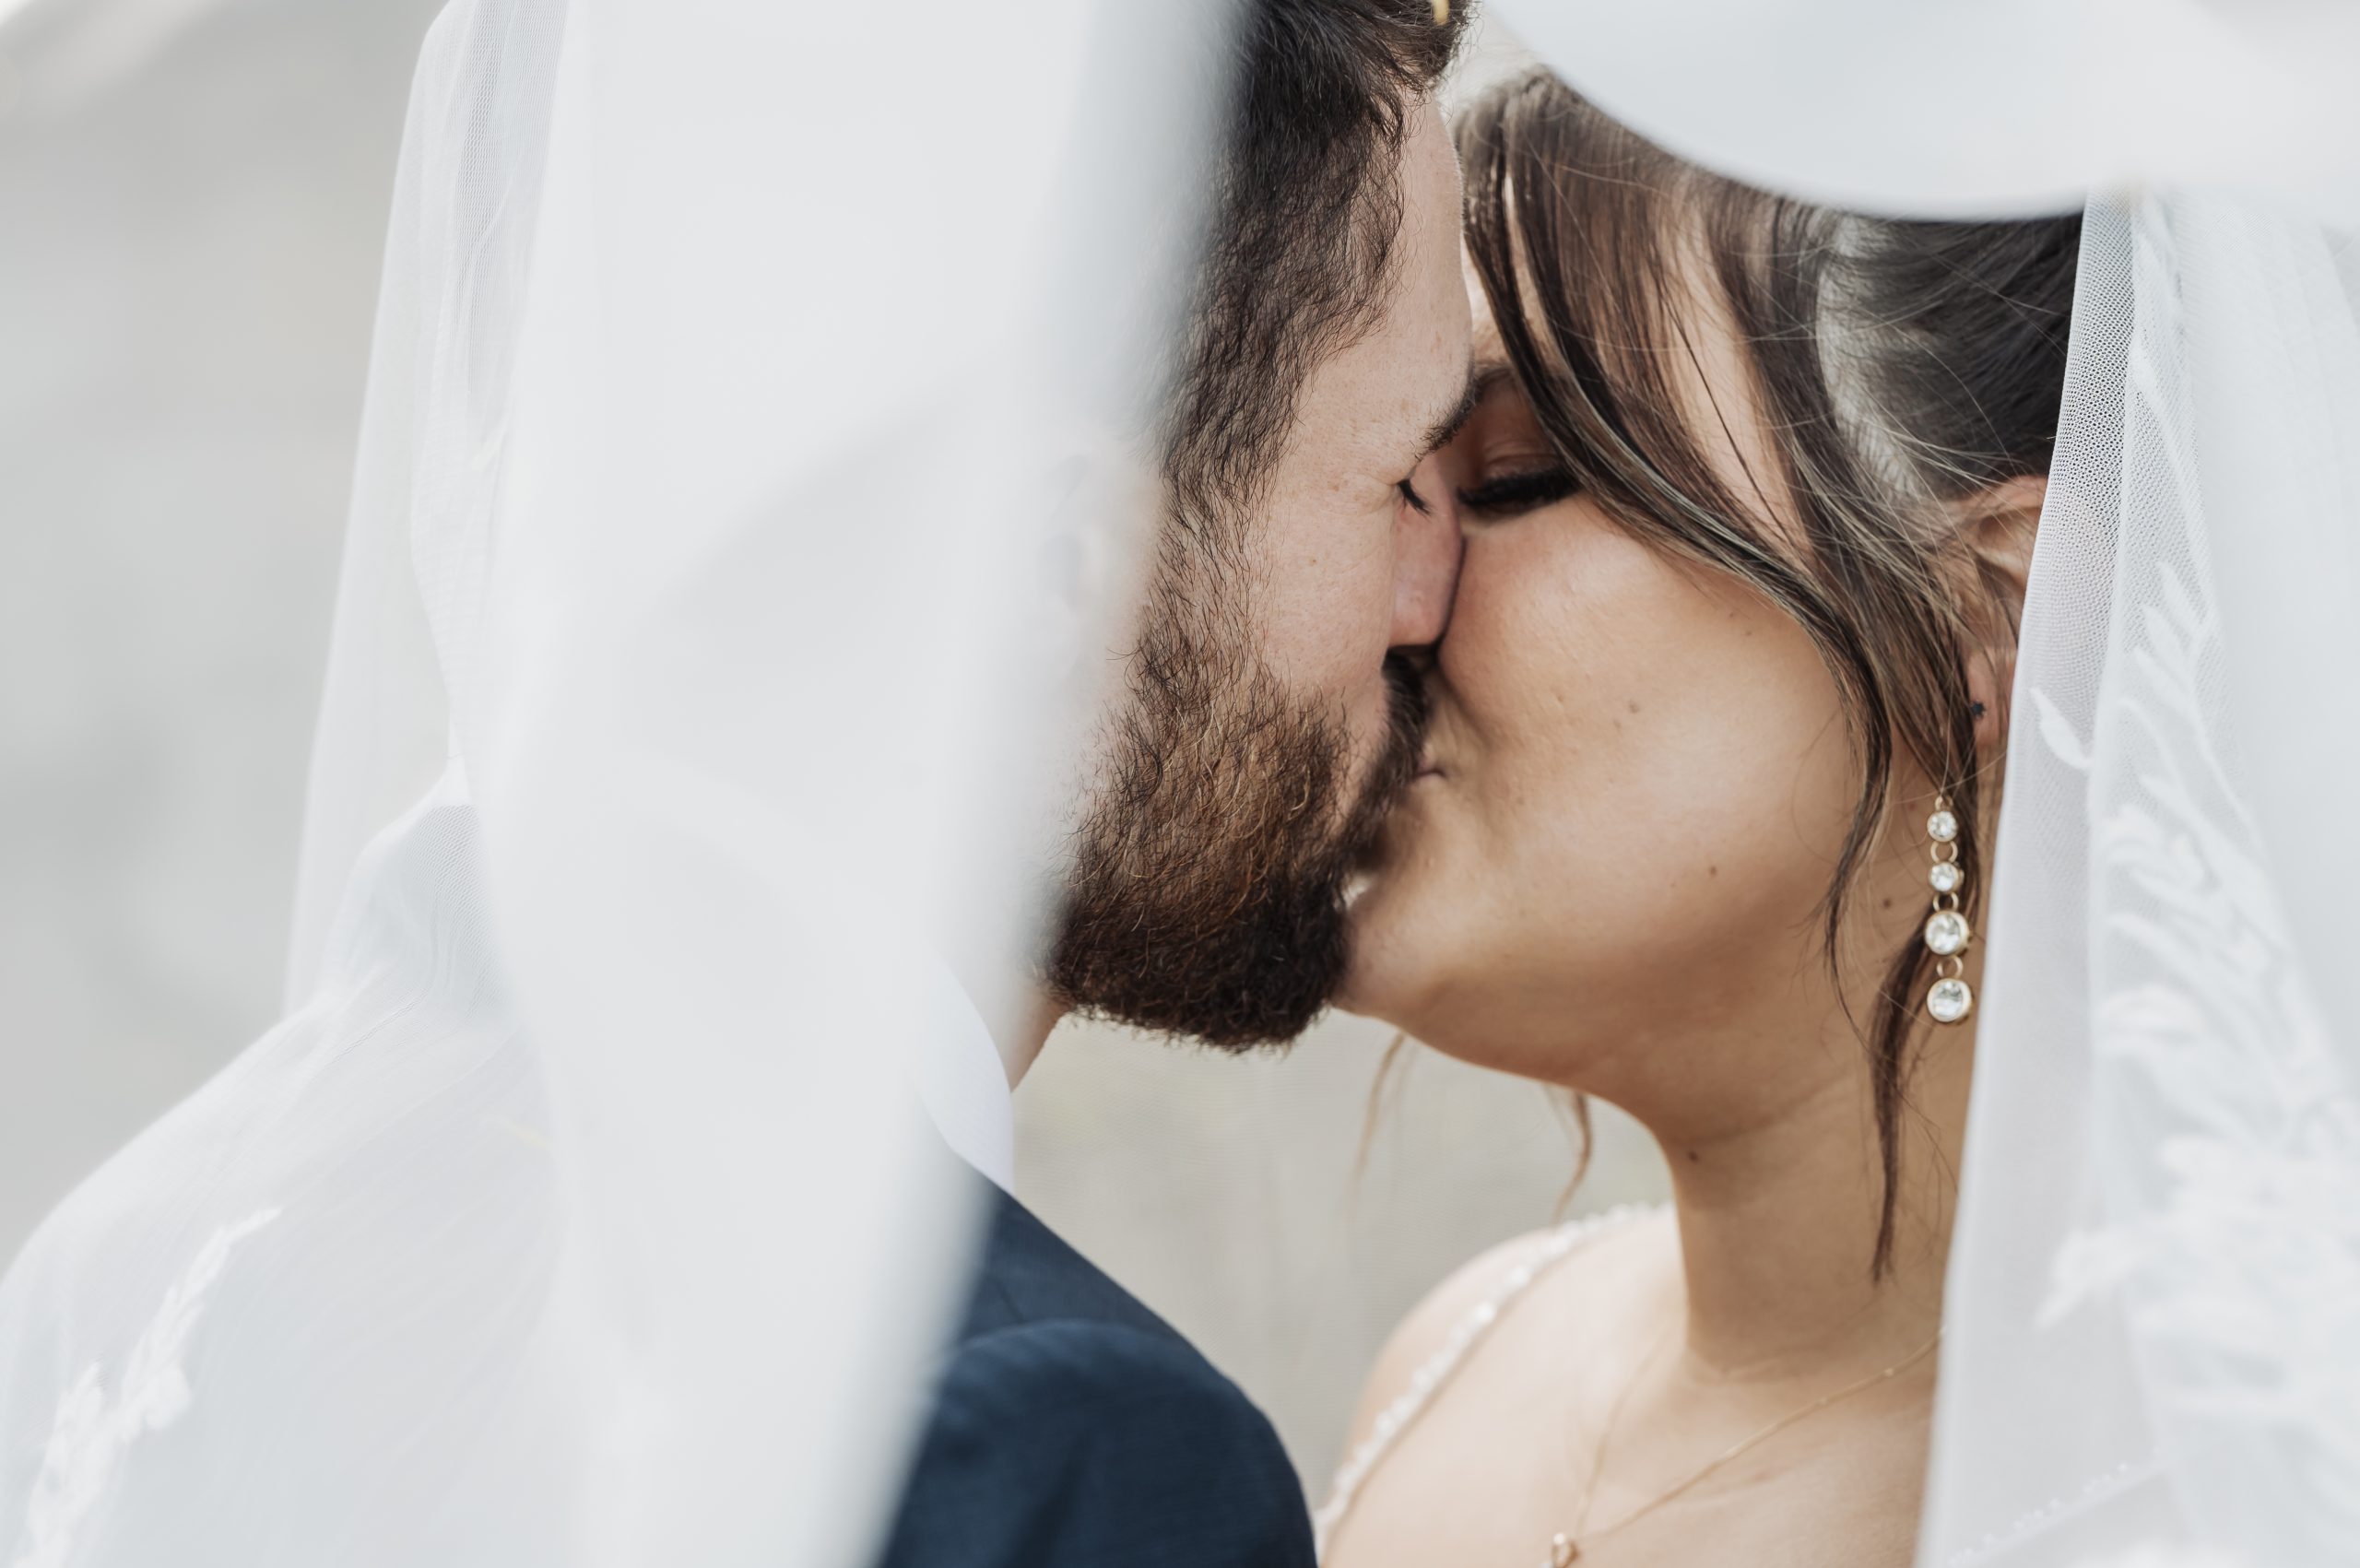 Bride & groom kissing under the veil